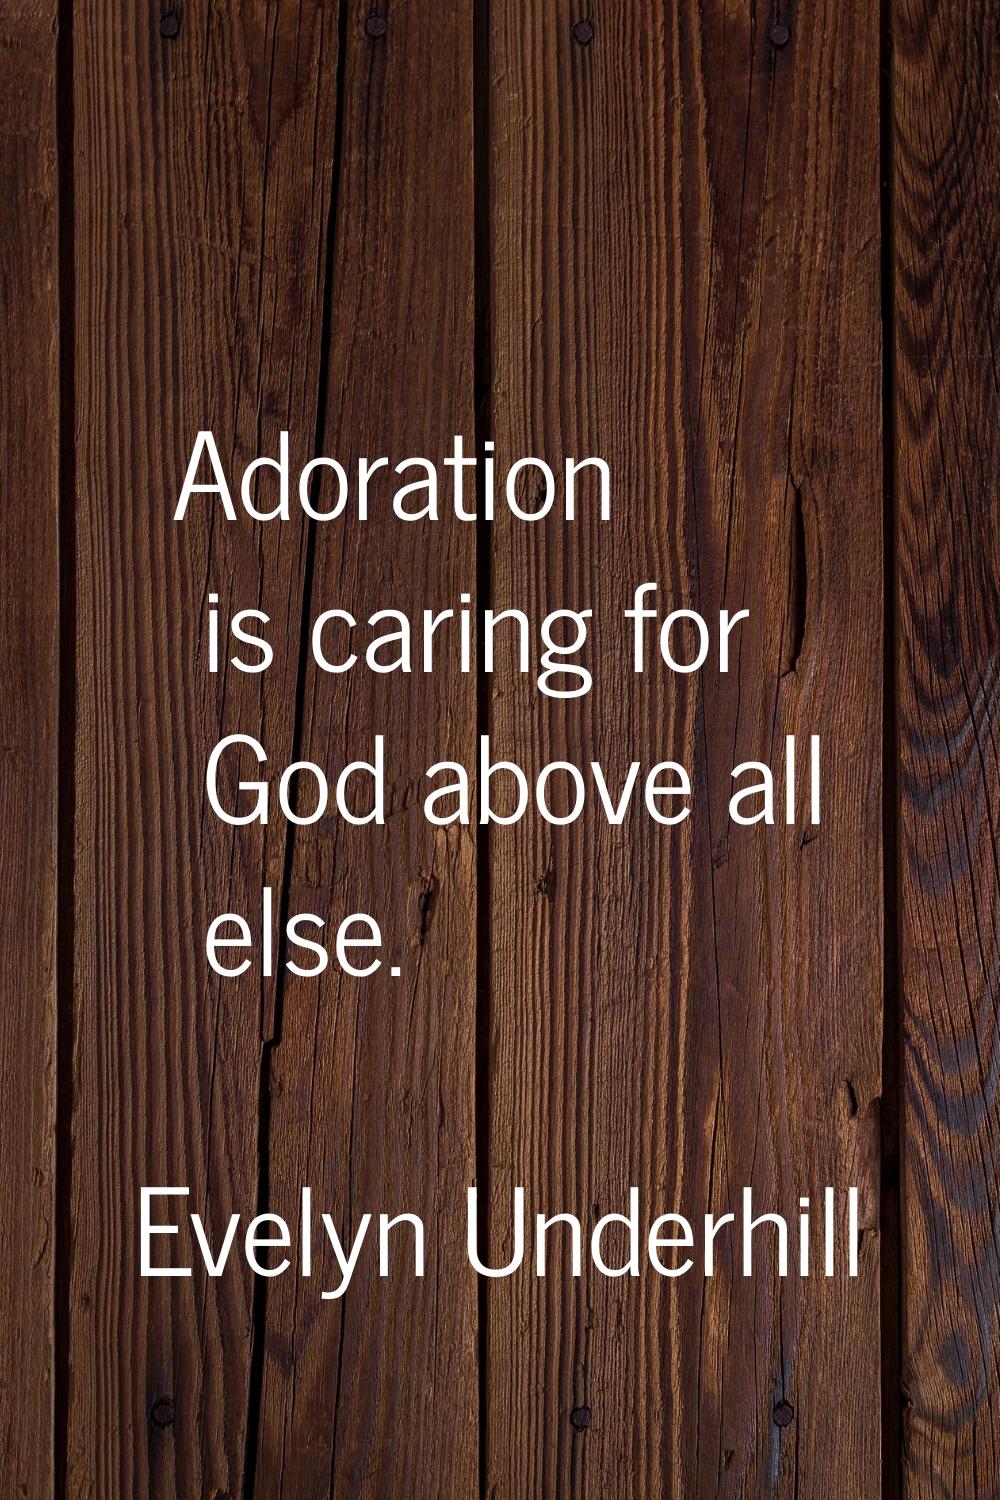 Adoration is caring for God above all else.